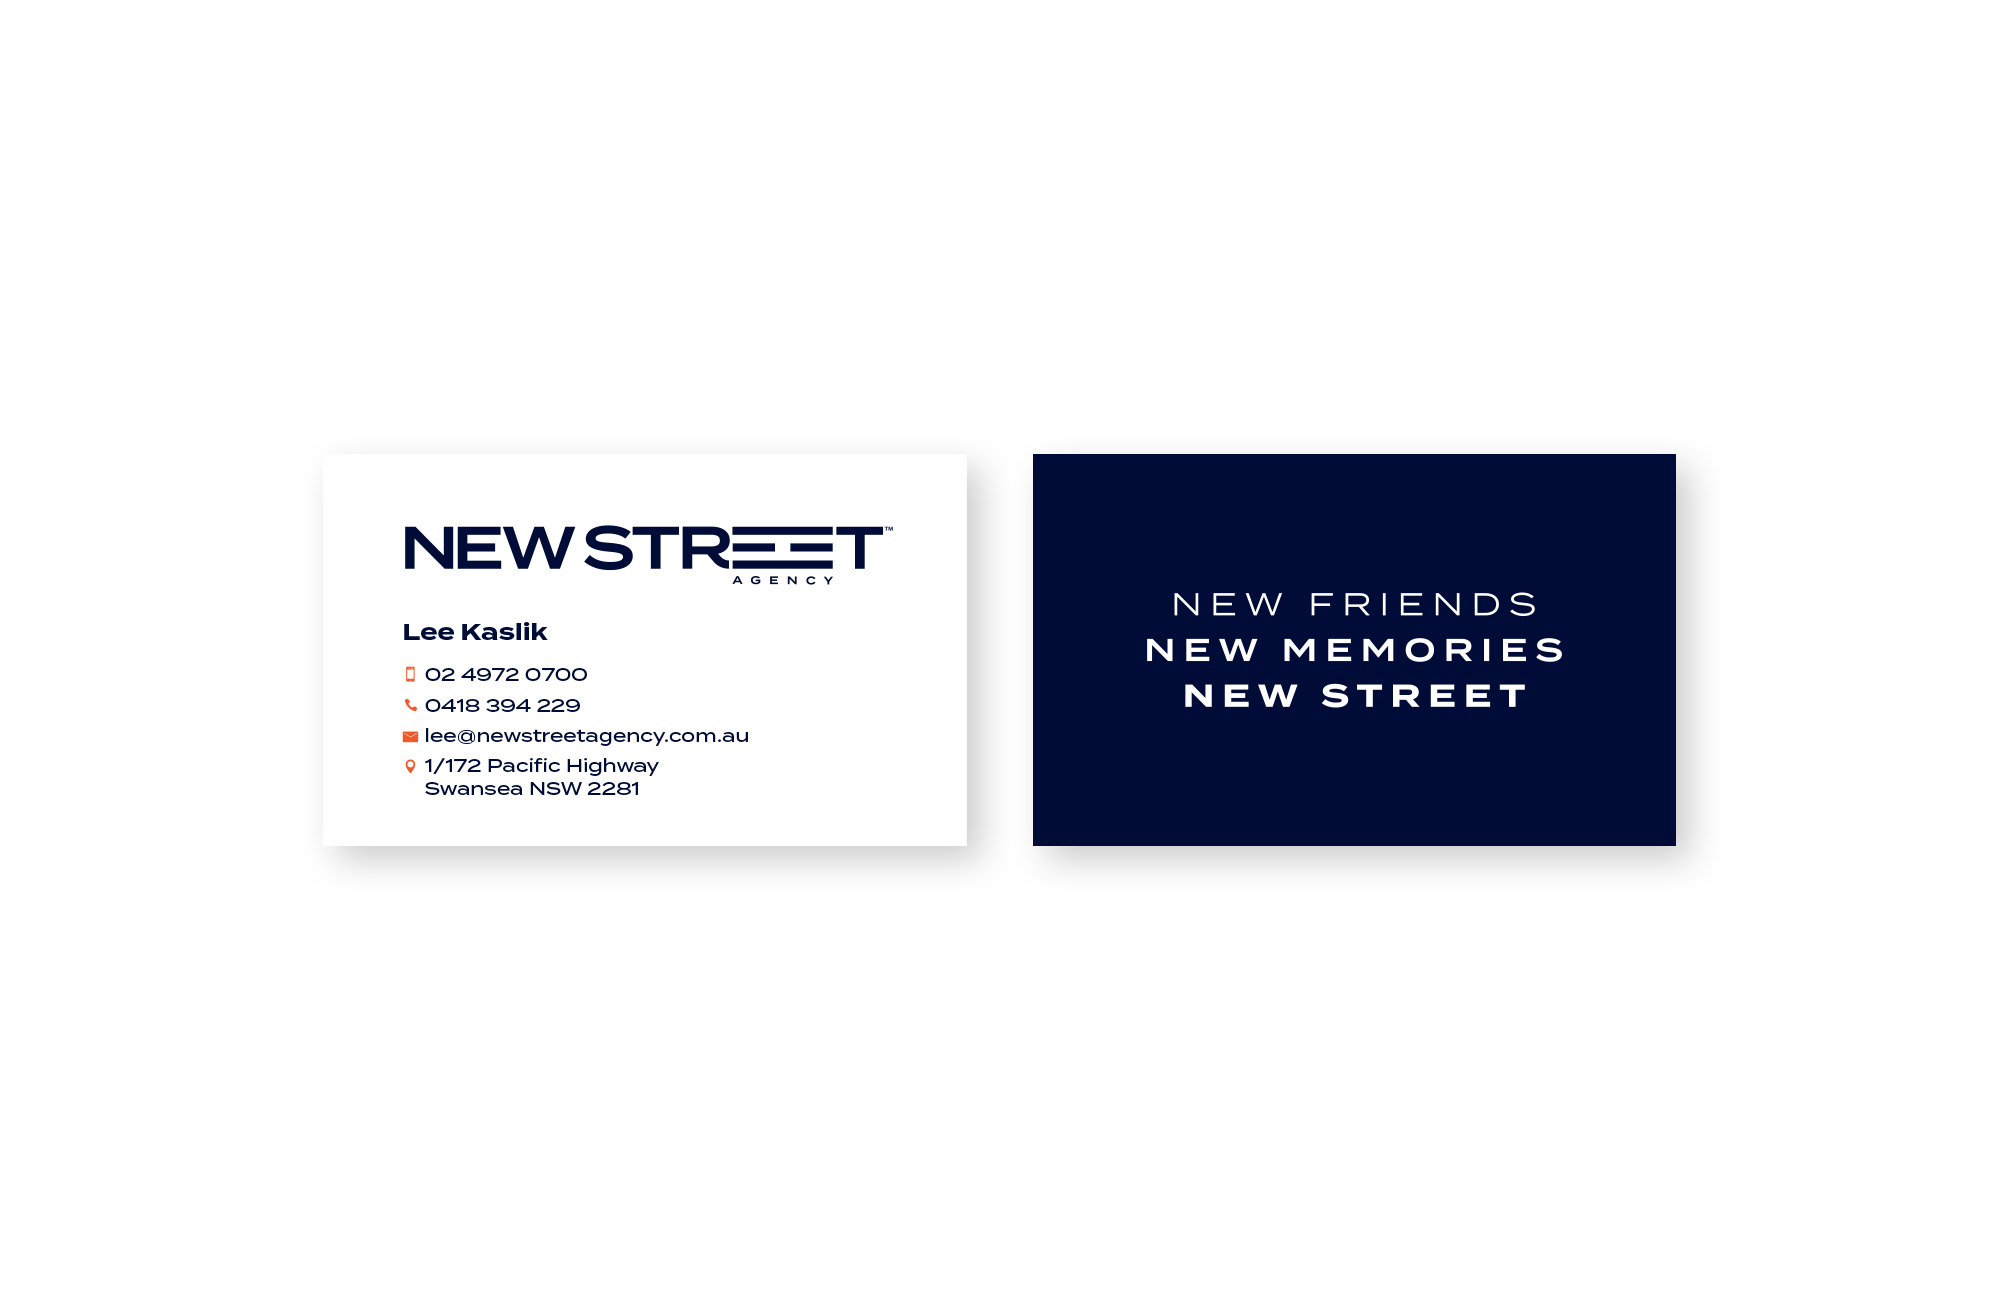 NewStreet Agency